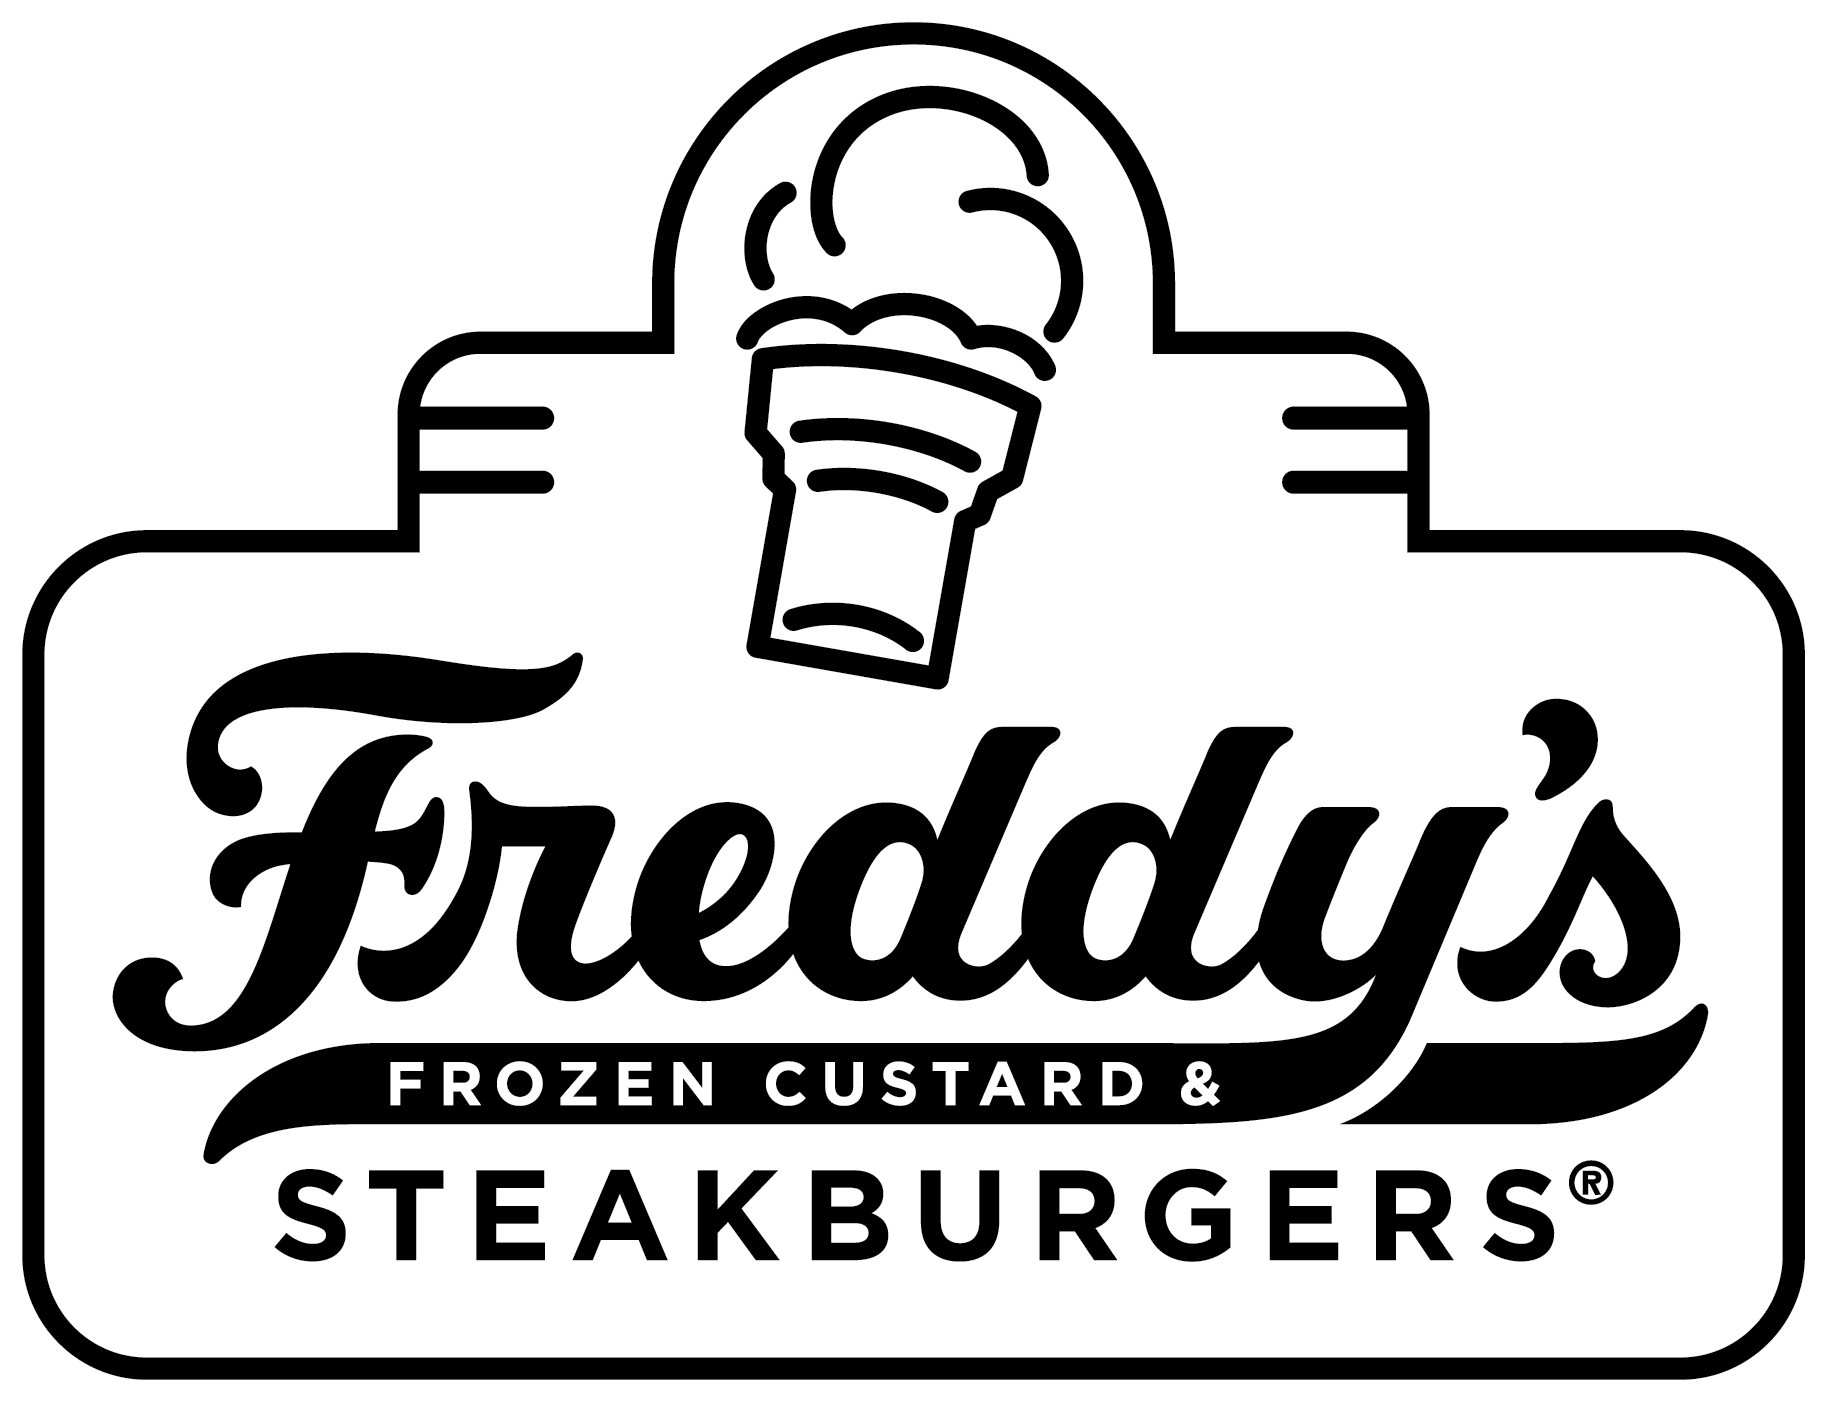 Frozen Black and White Logo - Graphics Library's Frozen Custard & Steakburgers